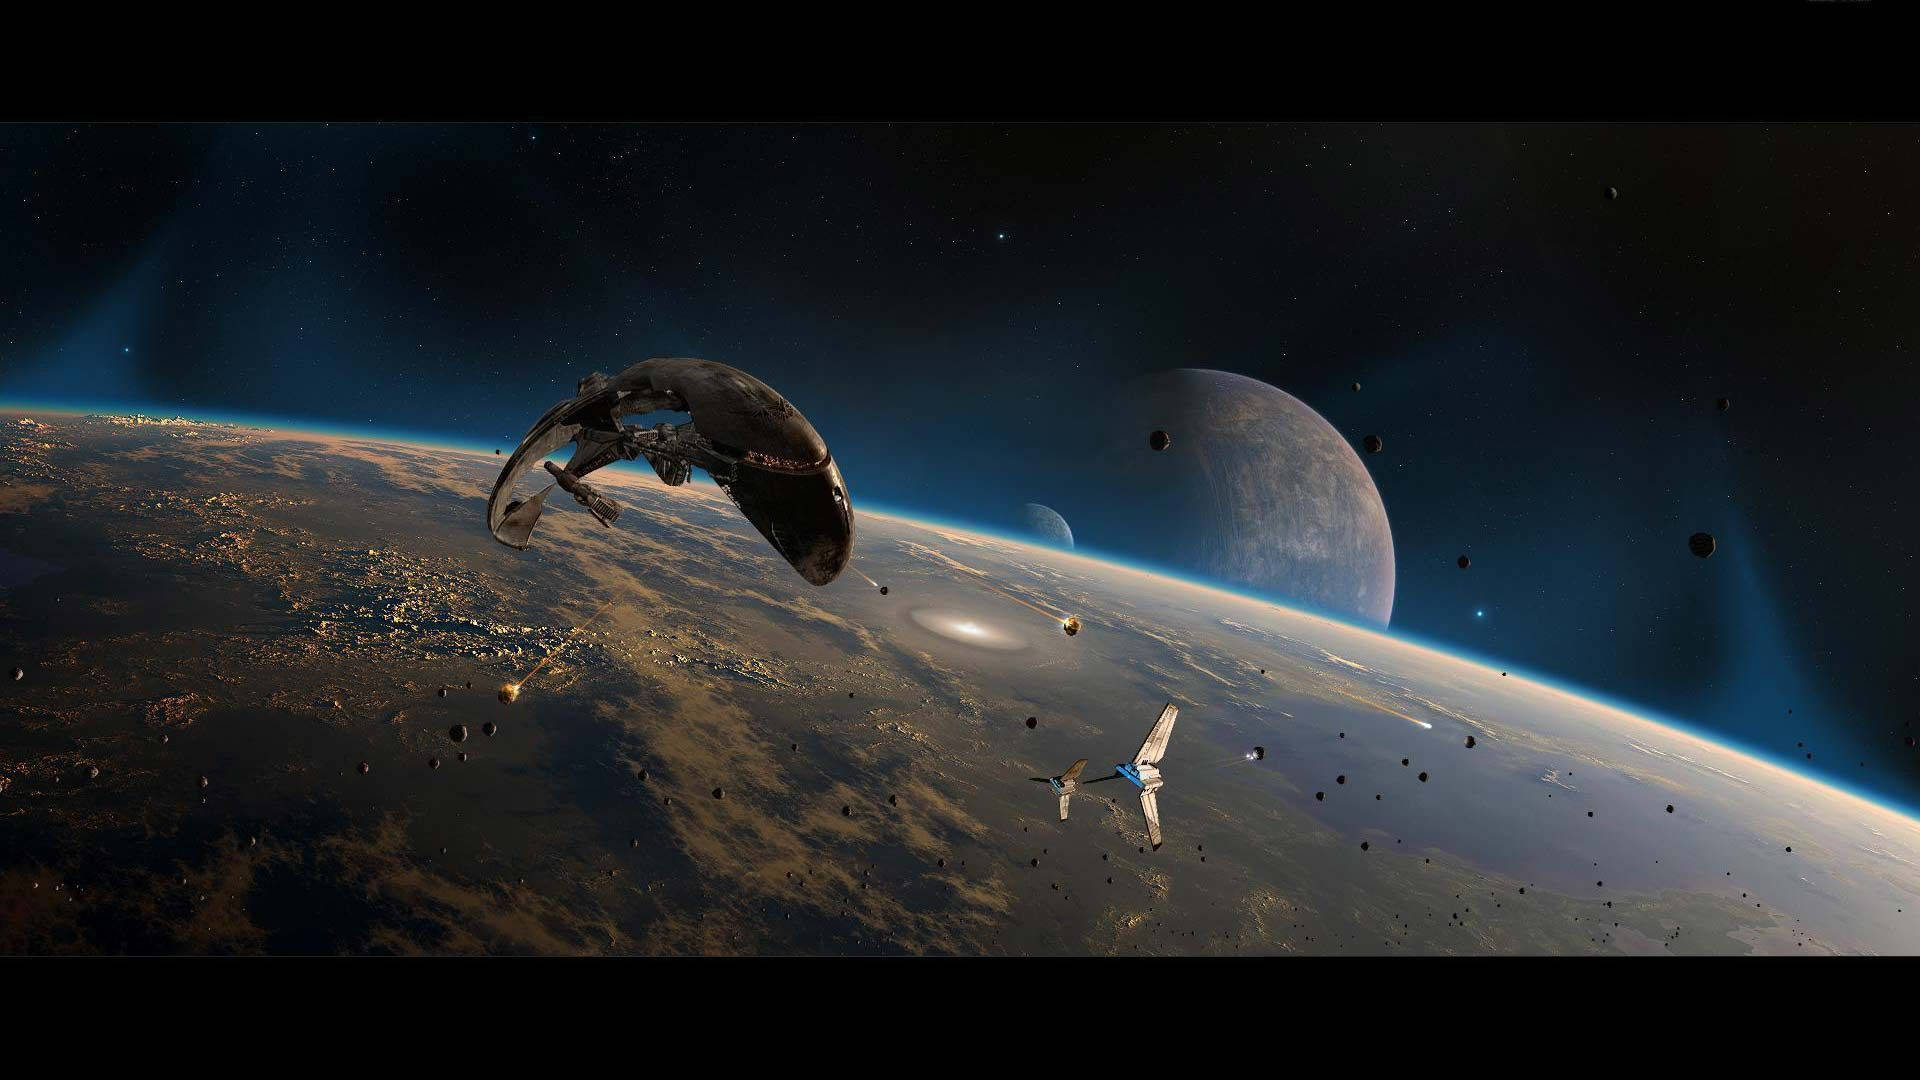 Spaceship Debris In Space Background